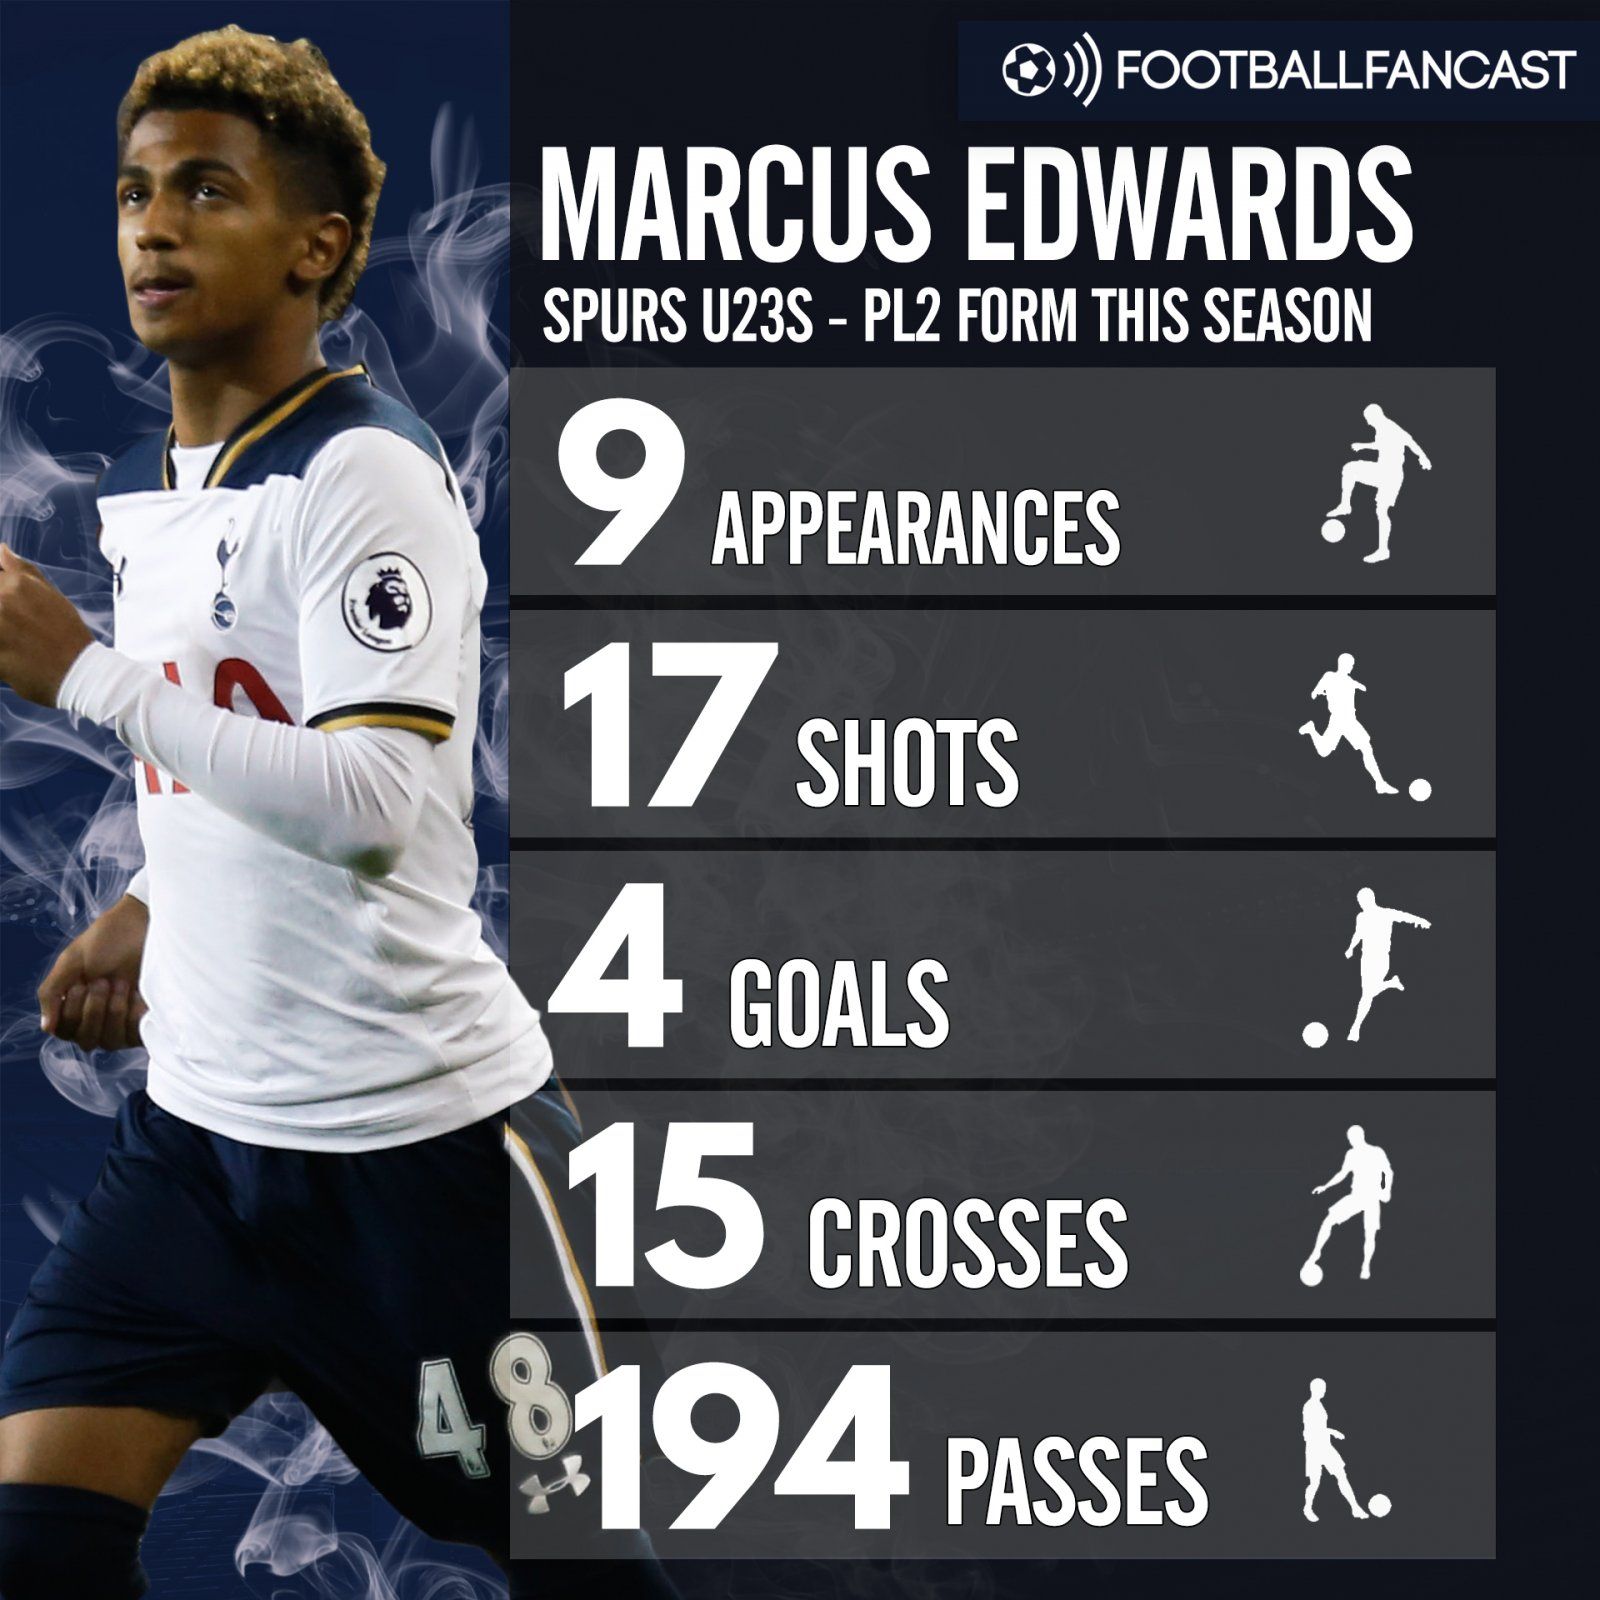 Marcus-Edwards-Spurs-u23-stats-1